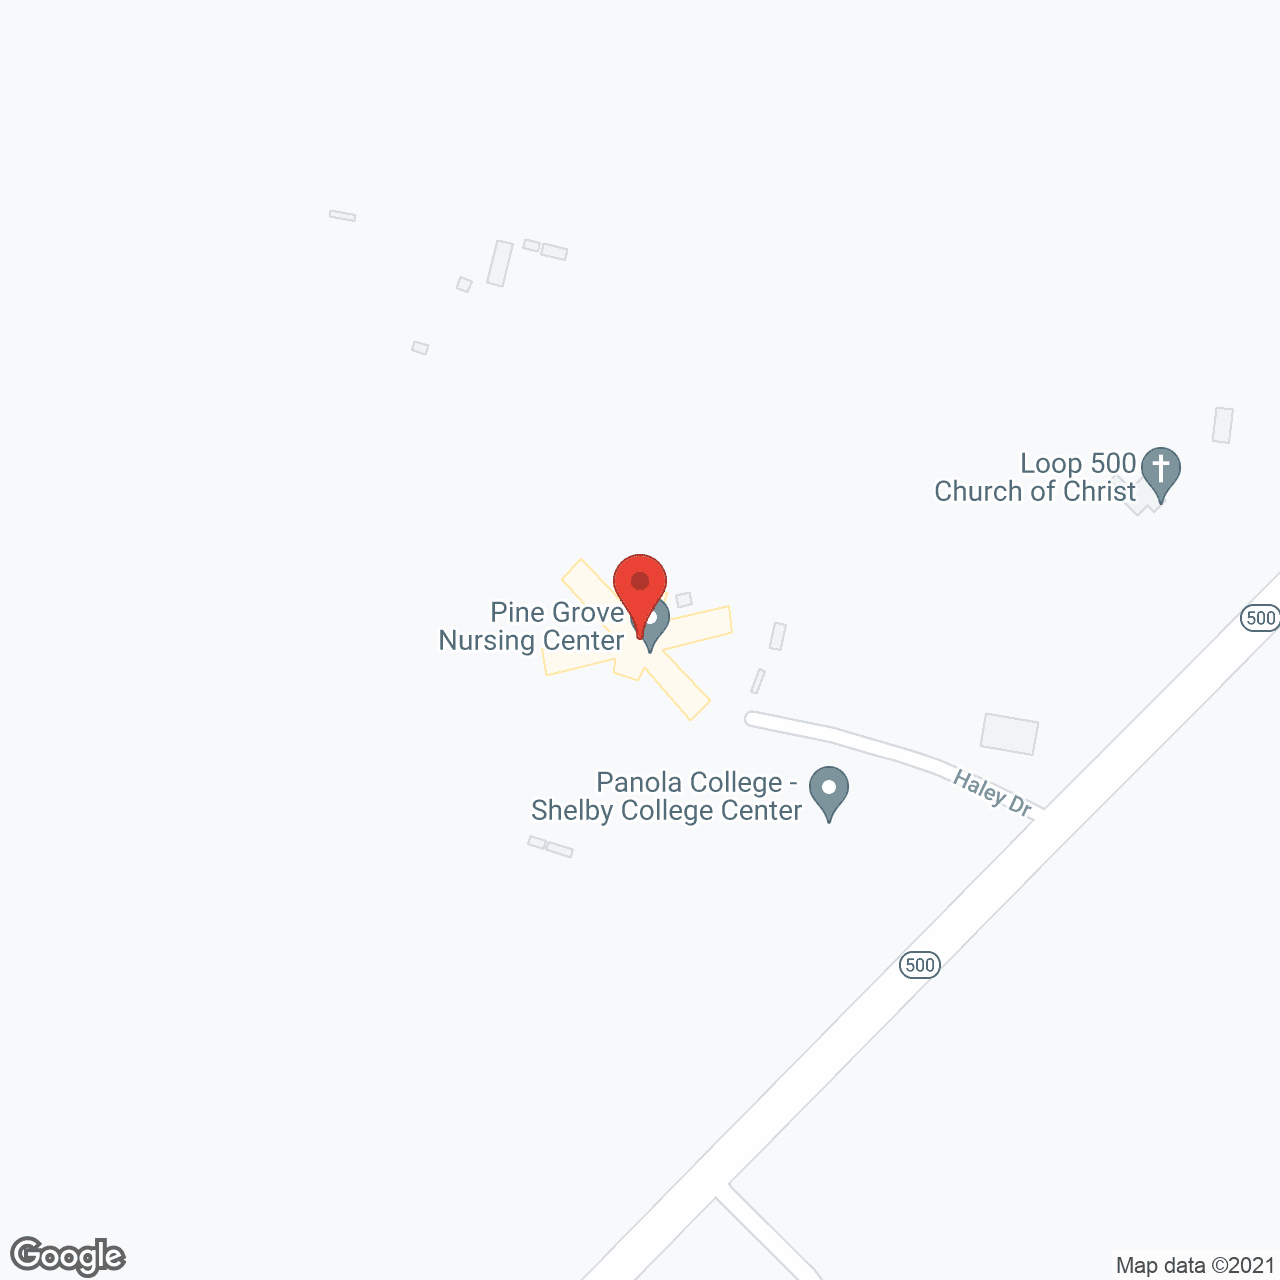 Pine Grove Nursing Center in google map